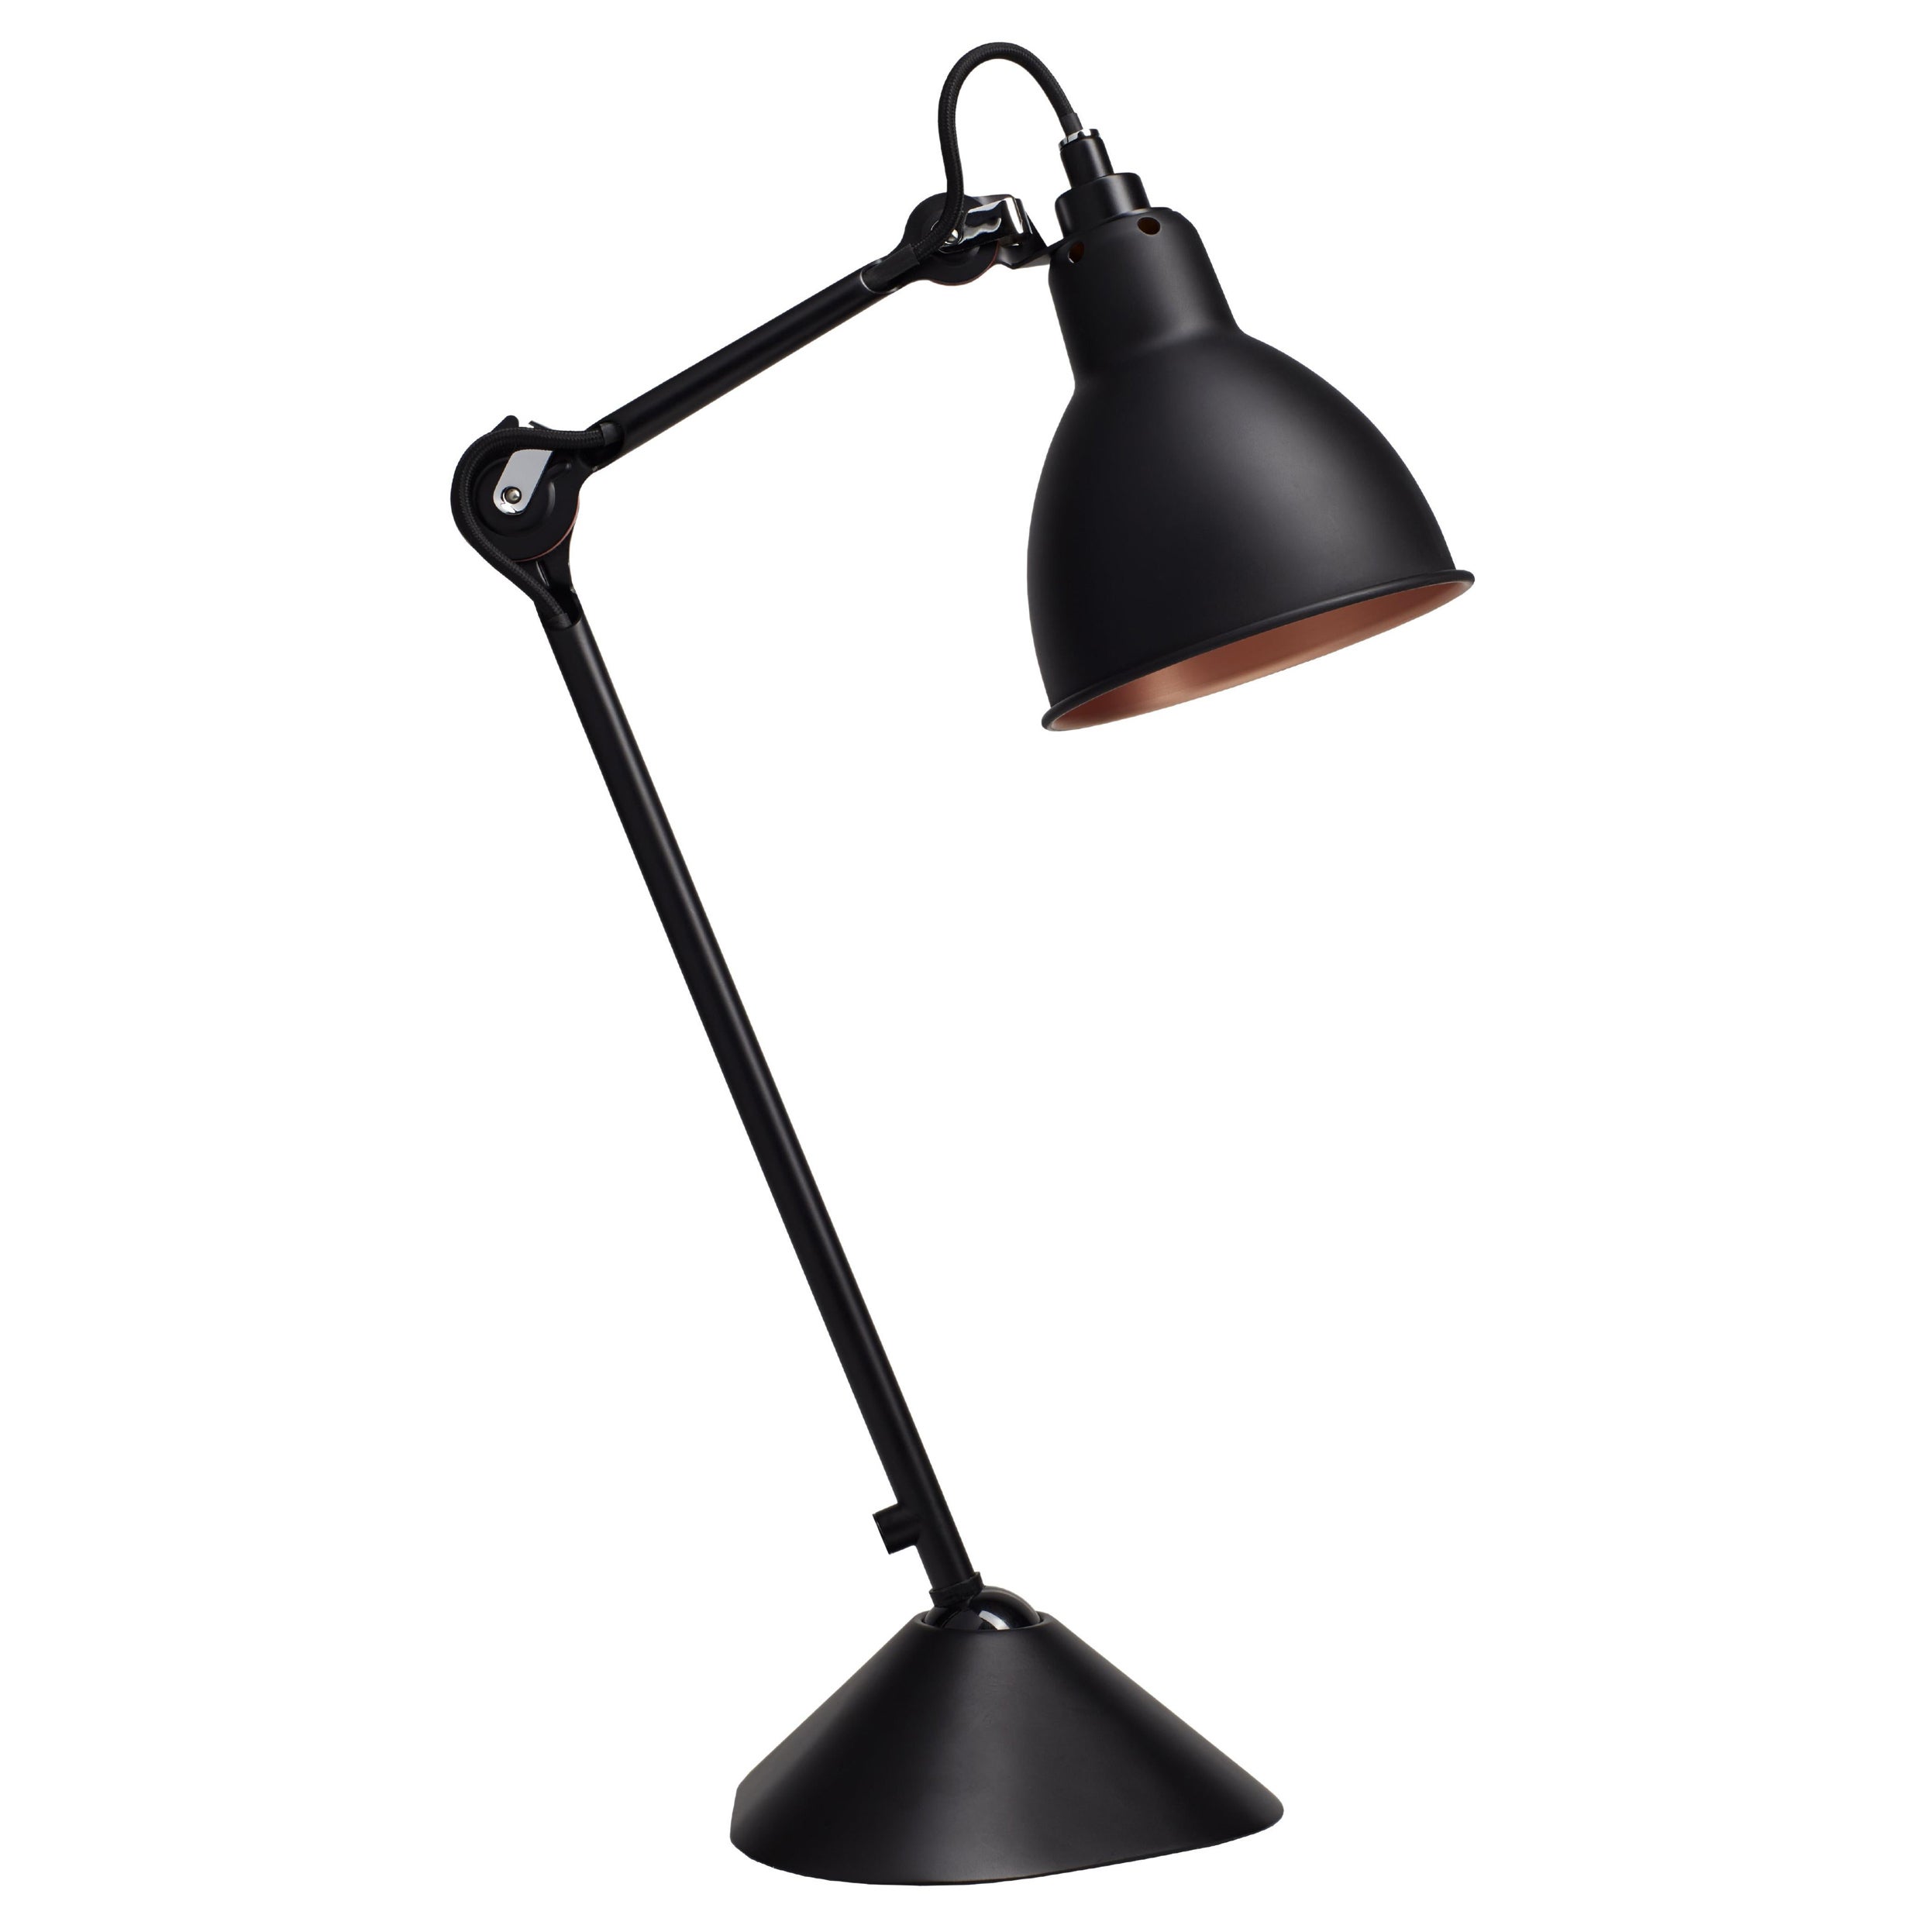 Black and Copper Lampe Gras N° 205 Table Lamp by Bernard-Albin Gras